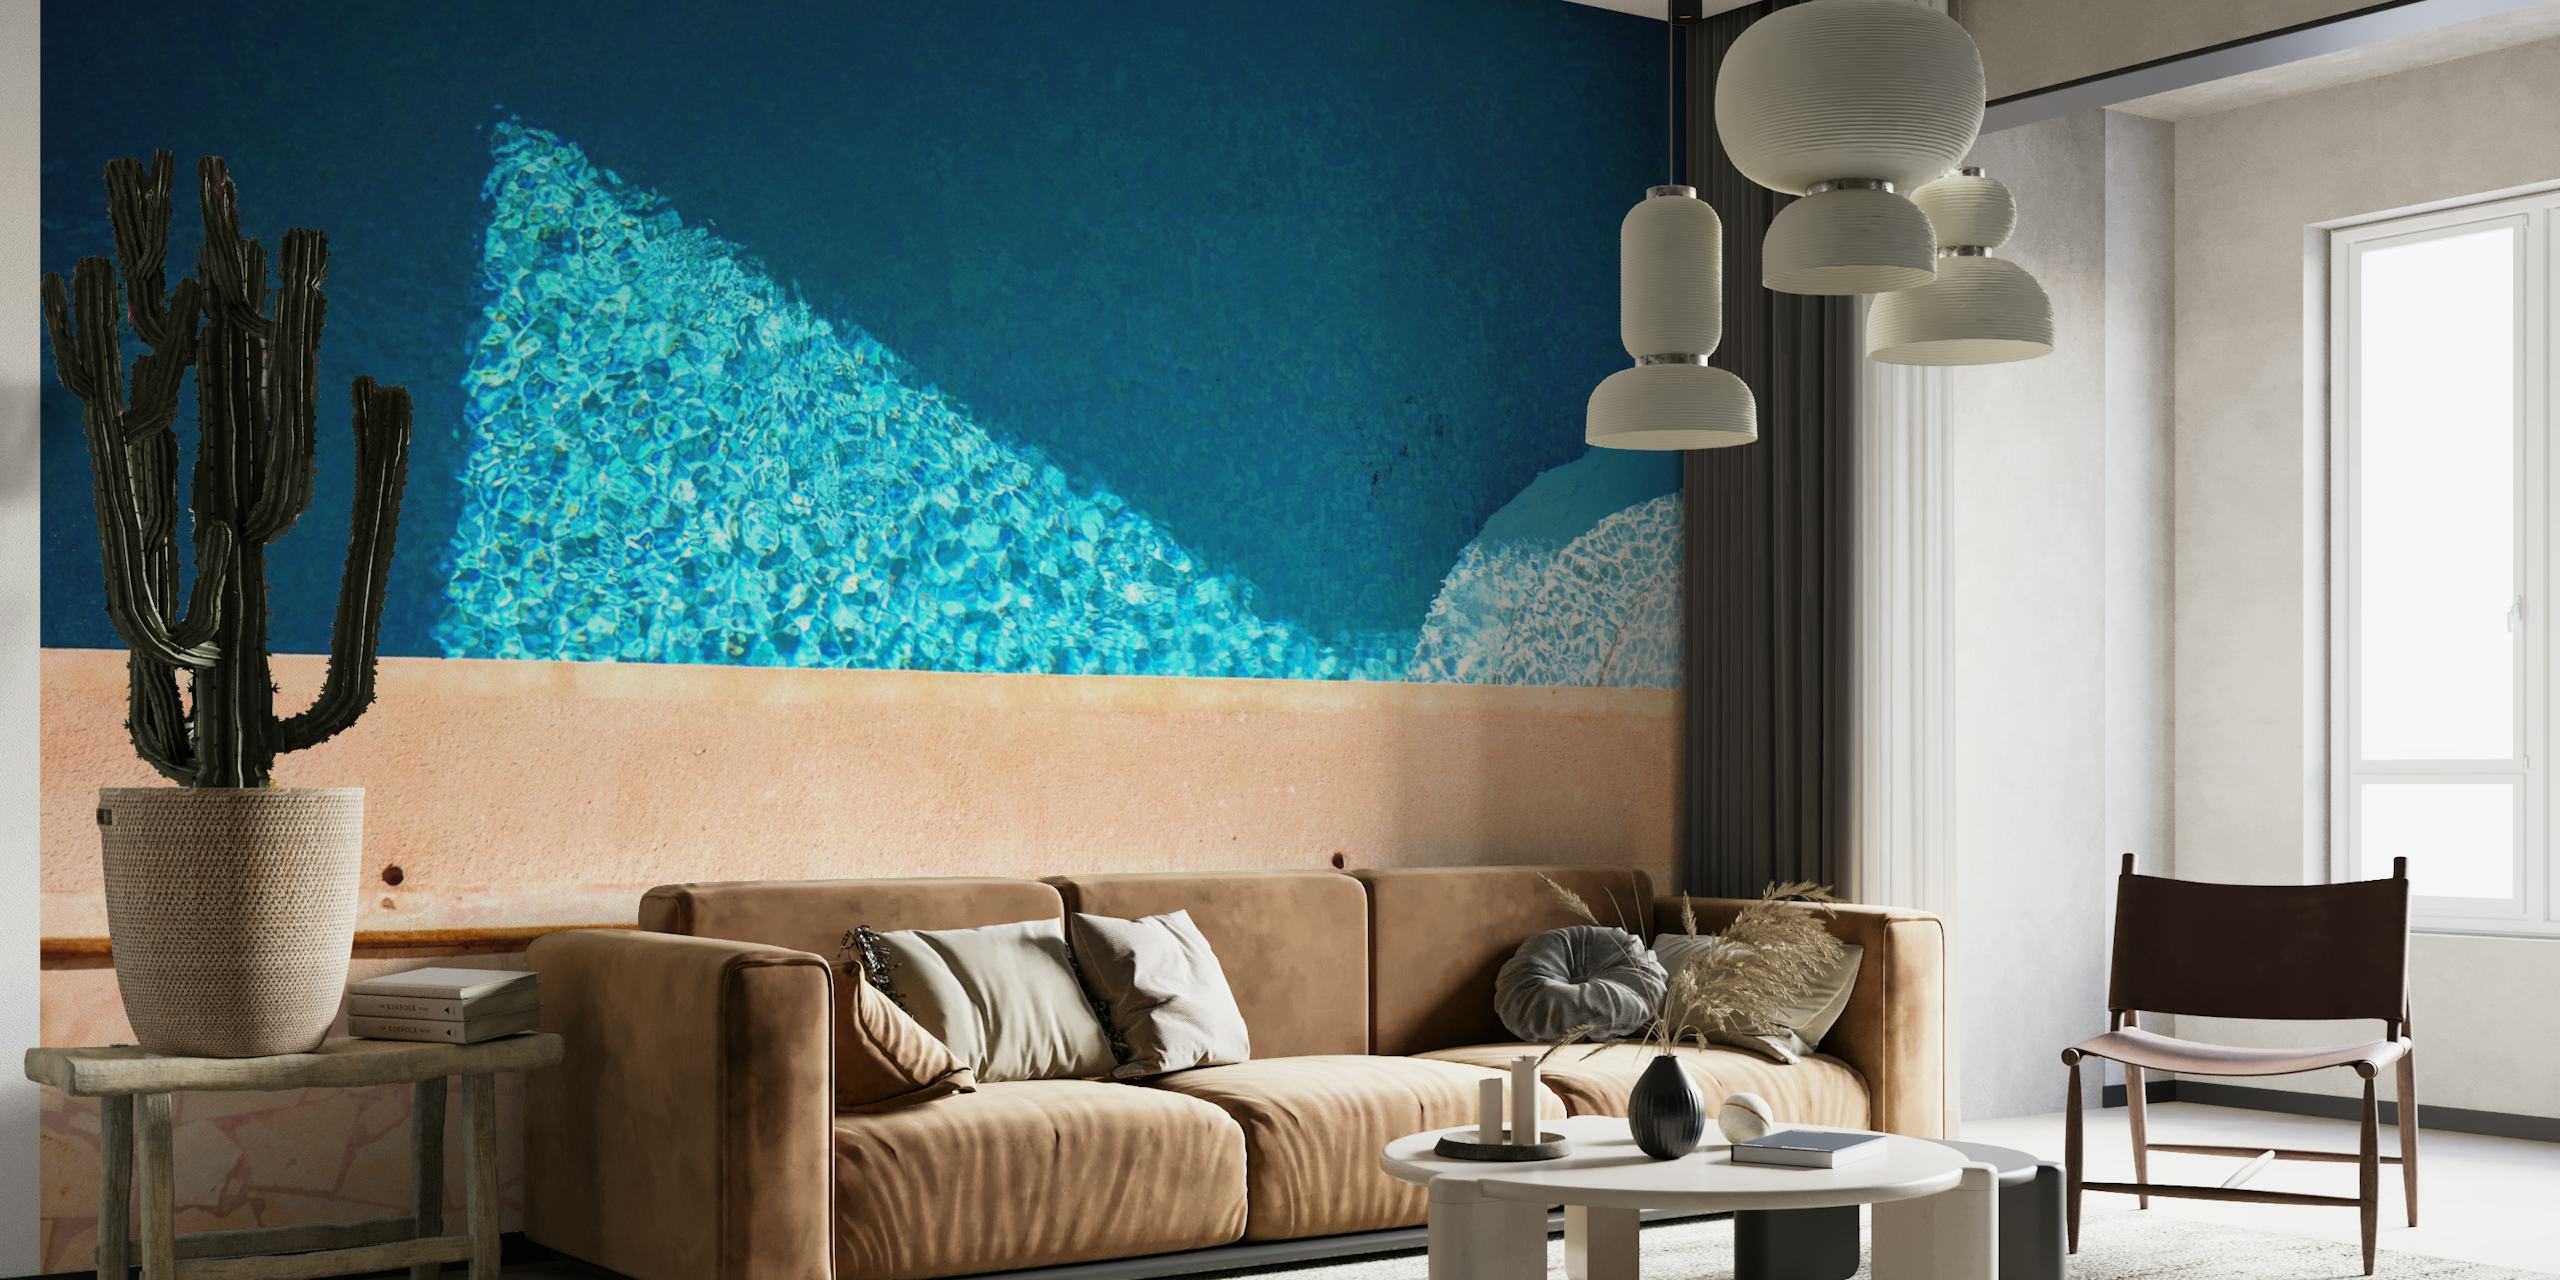 Mural de California Pool Dream que representa las frías aguas azules de una piscina con azulejos de terracota